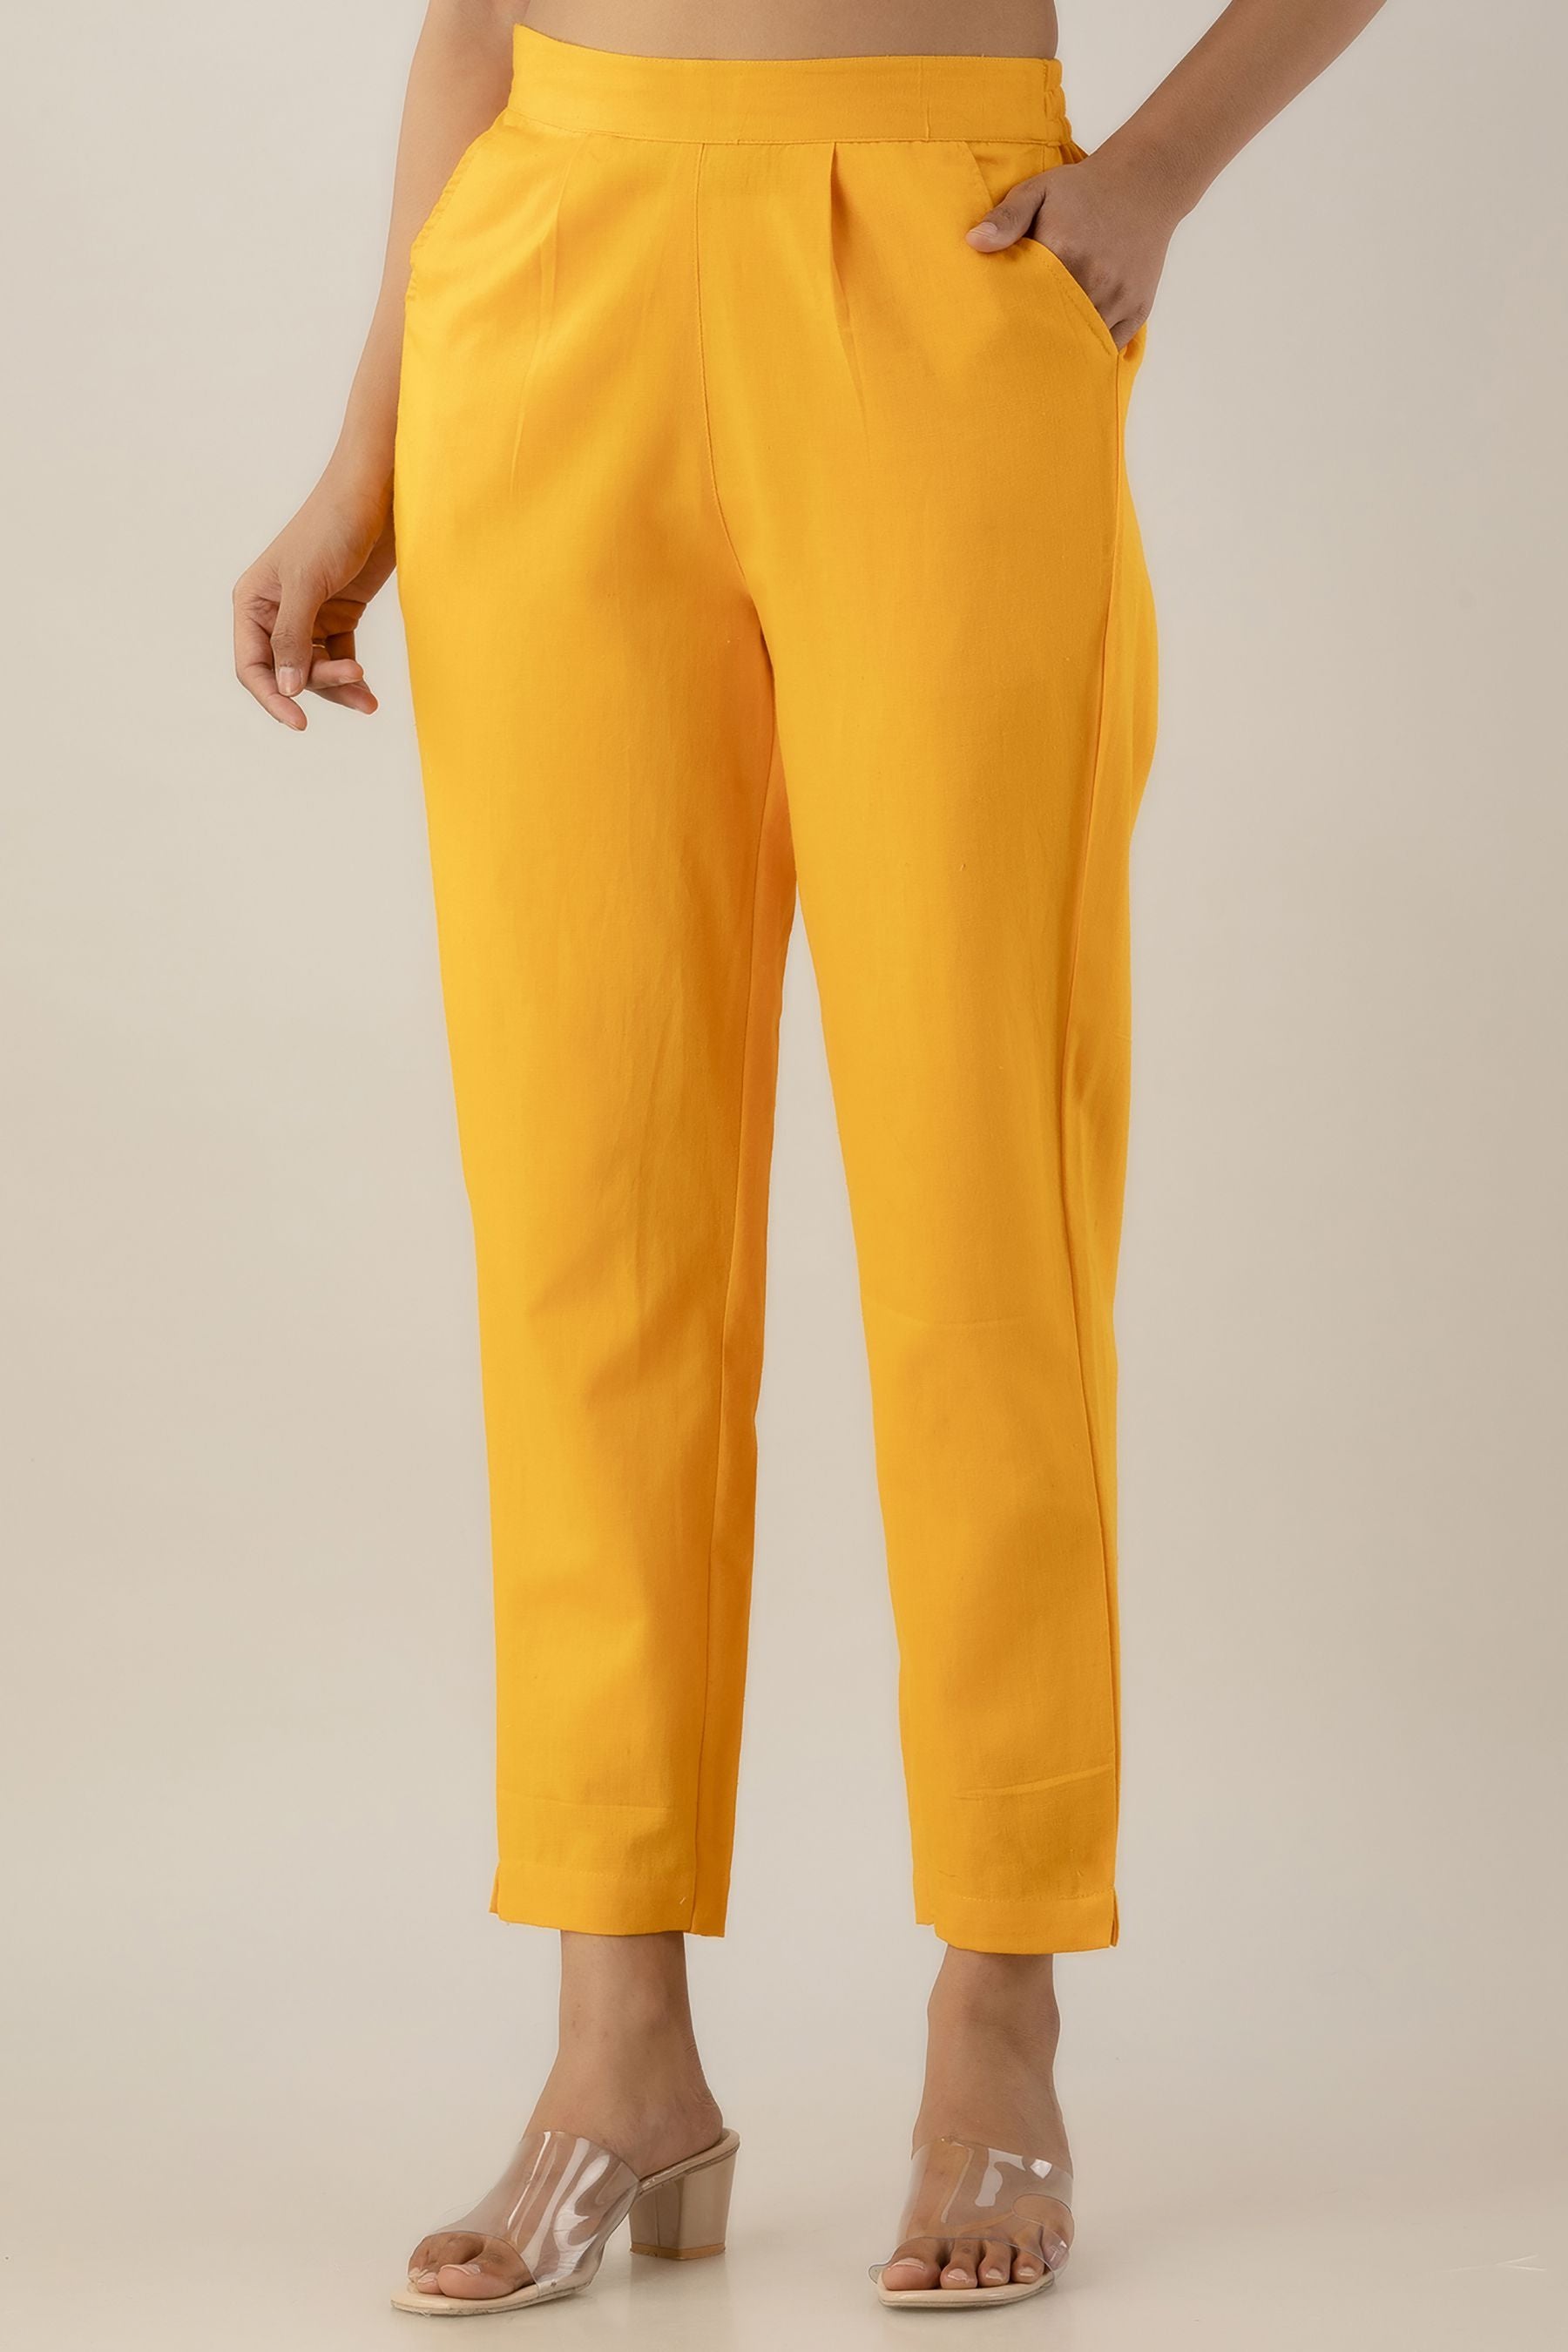 Salt Attire Women's Yellow wide leg pants